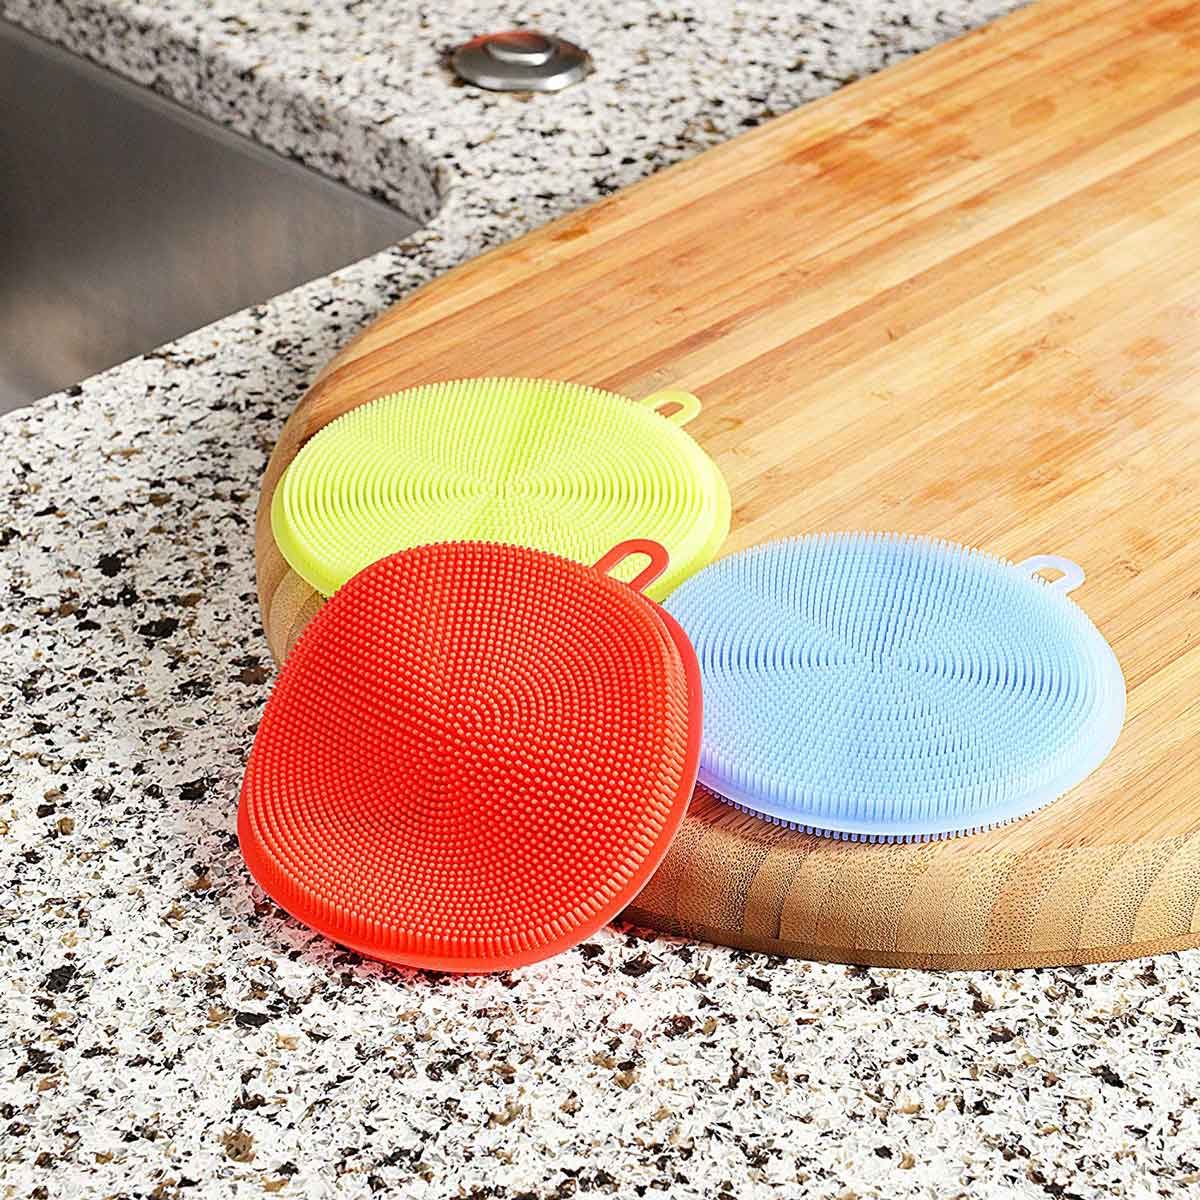 Silicone world Kitchen Cleaning brush Cleaner Handheld Press Type Automatic  Liquid Adding Dishwashing Dish Brush Pot